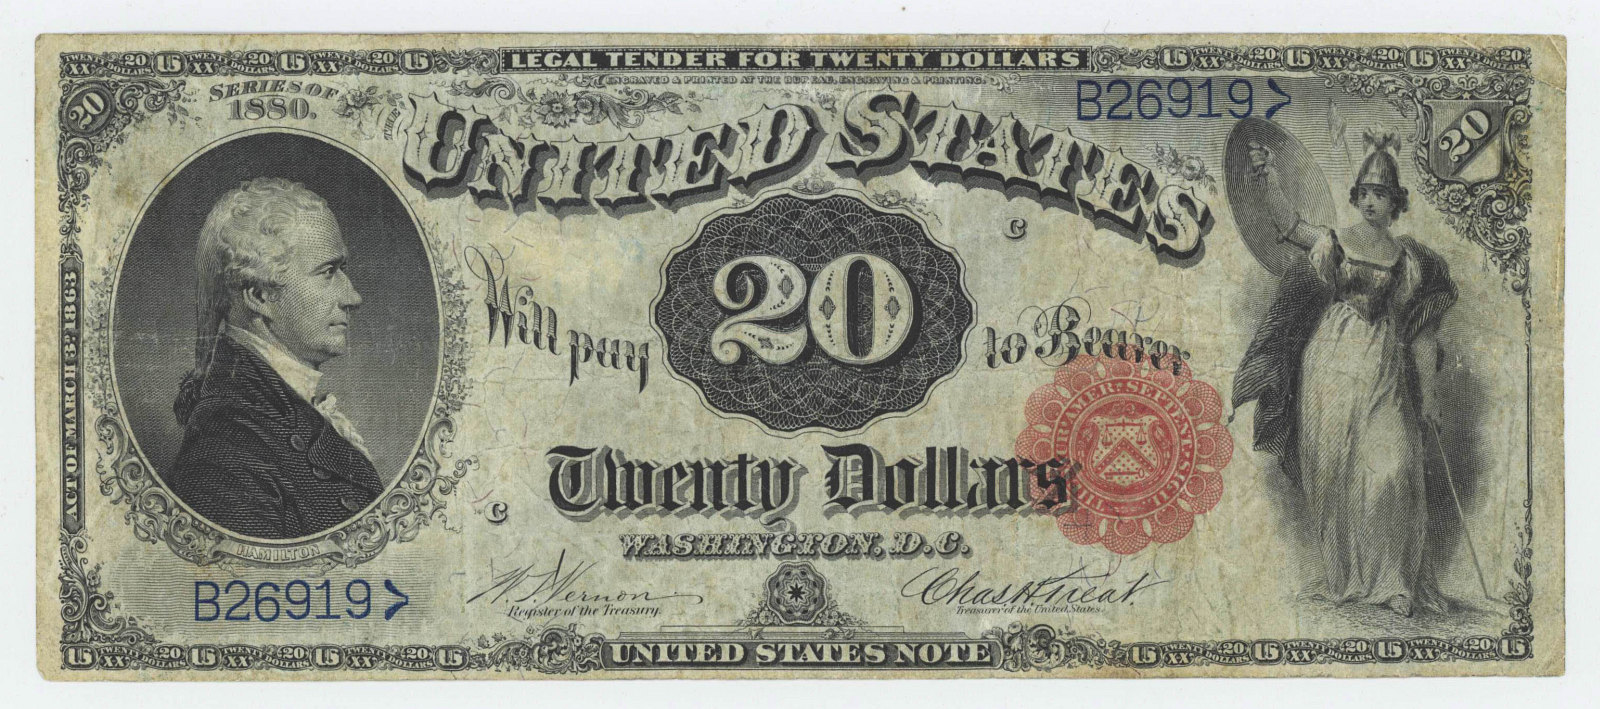 1880 TWENTY DOLLAR LEGAL TENDER NOTE